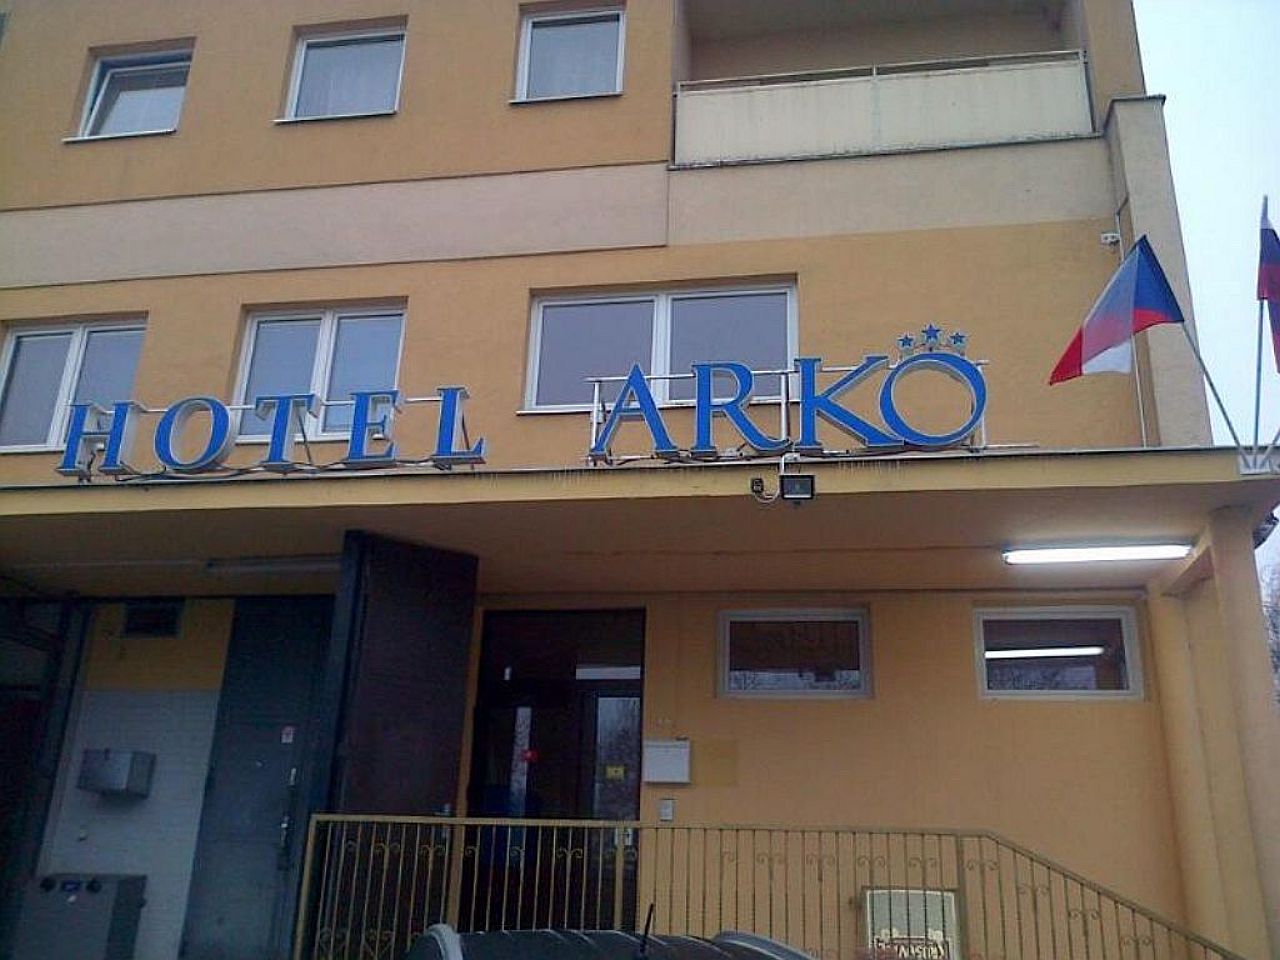 HOTEL ARKO